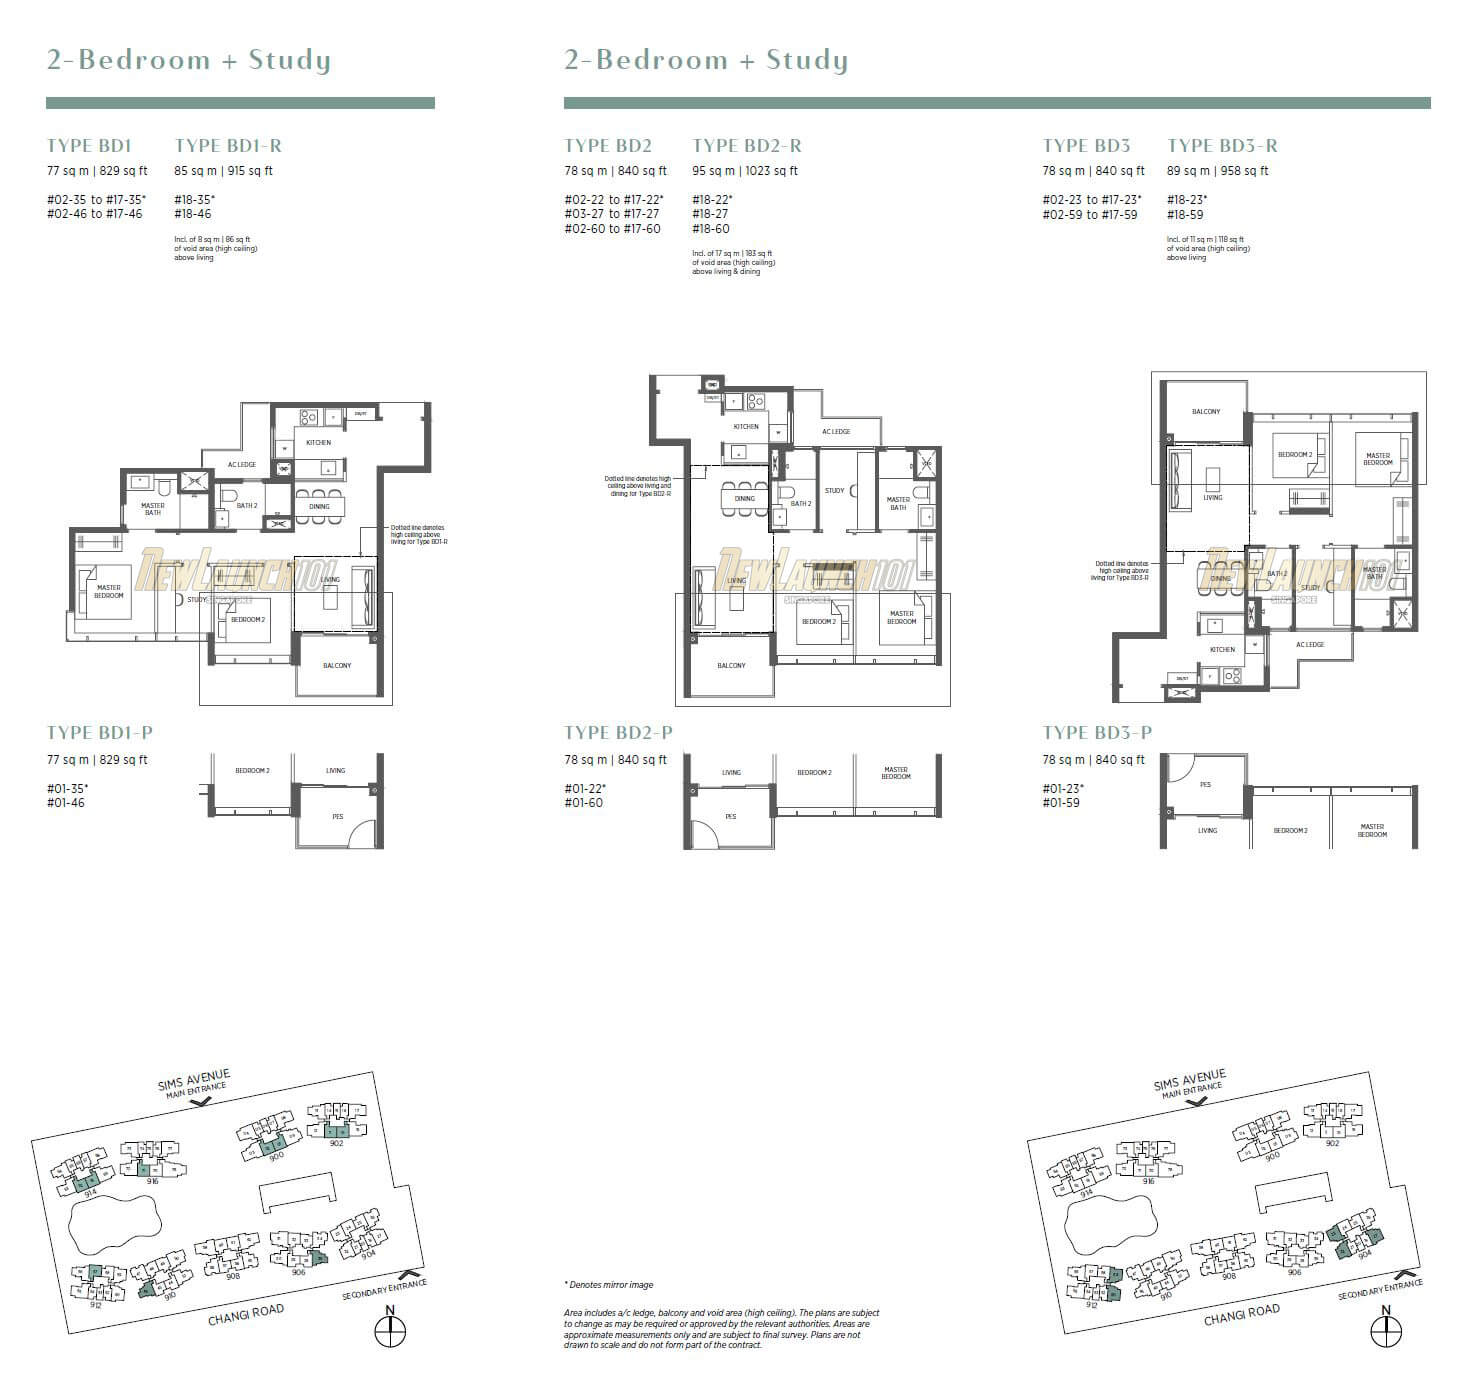 Parc Esta Floor Plan 2-Bedroom Study